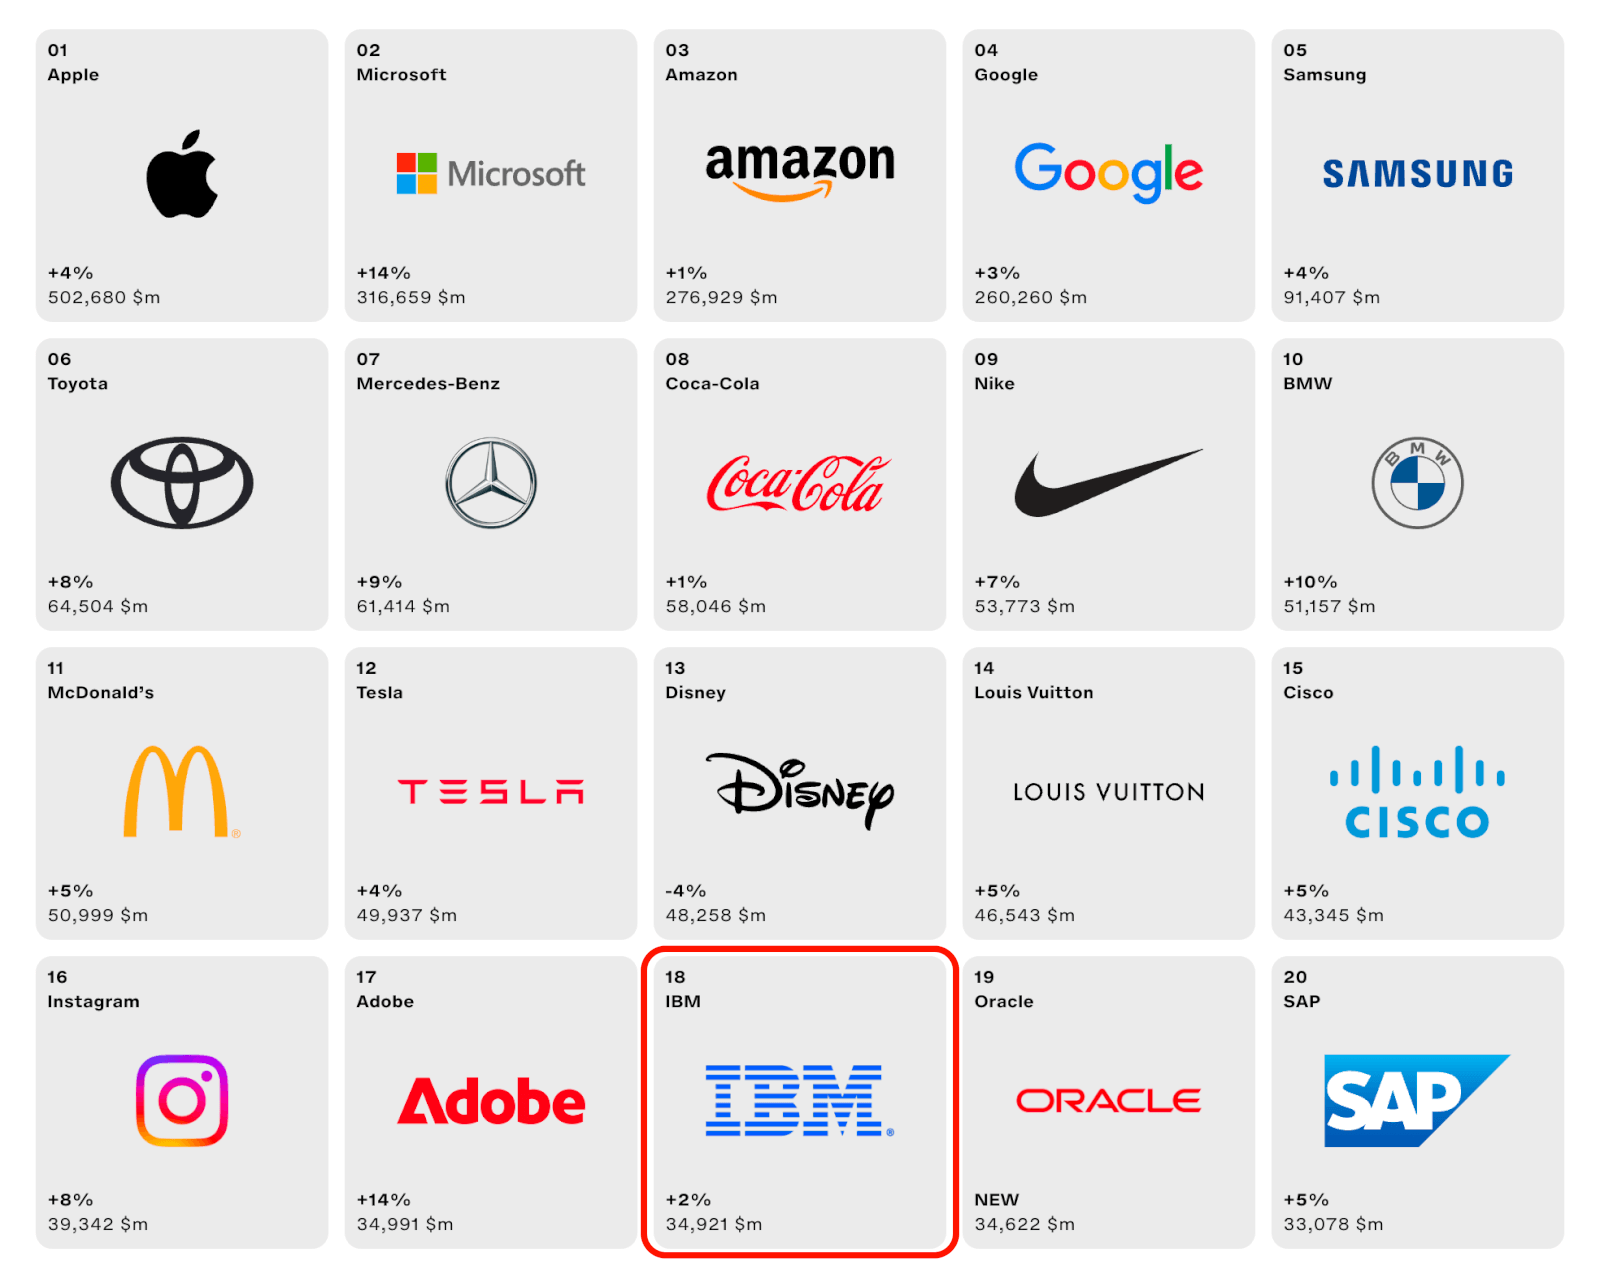 Best Global Brands 2023